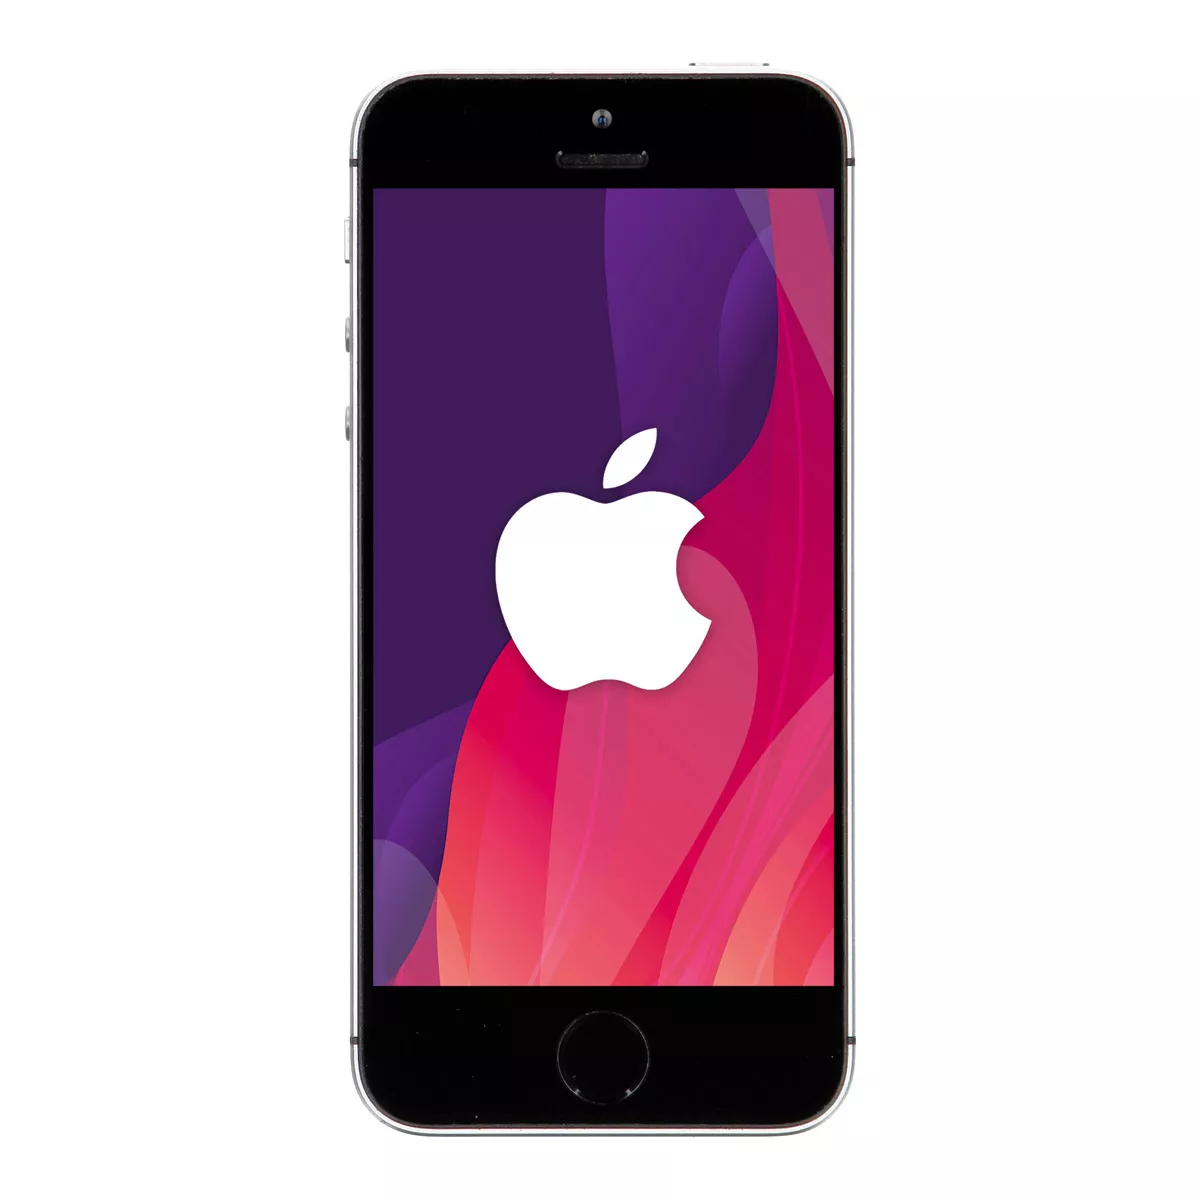 Apple iPhone SE space-gray 128 GB